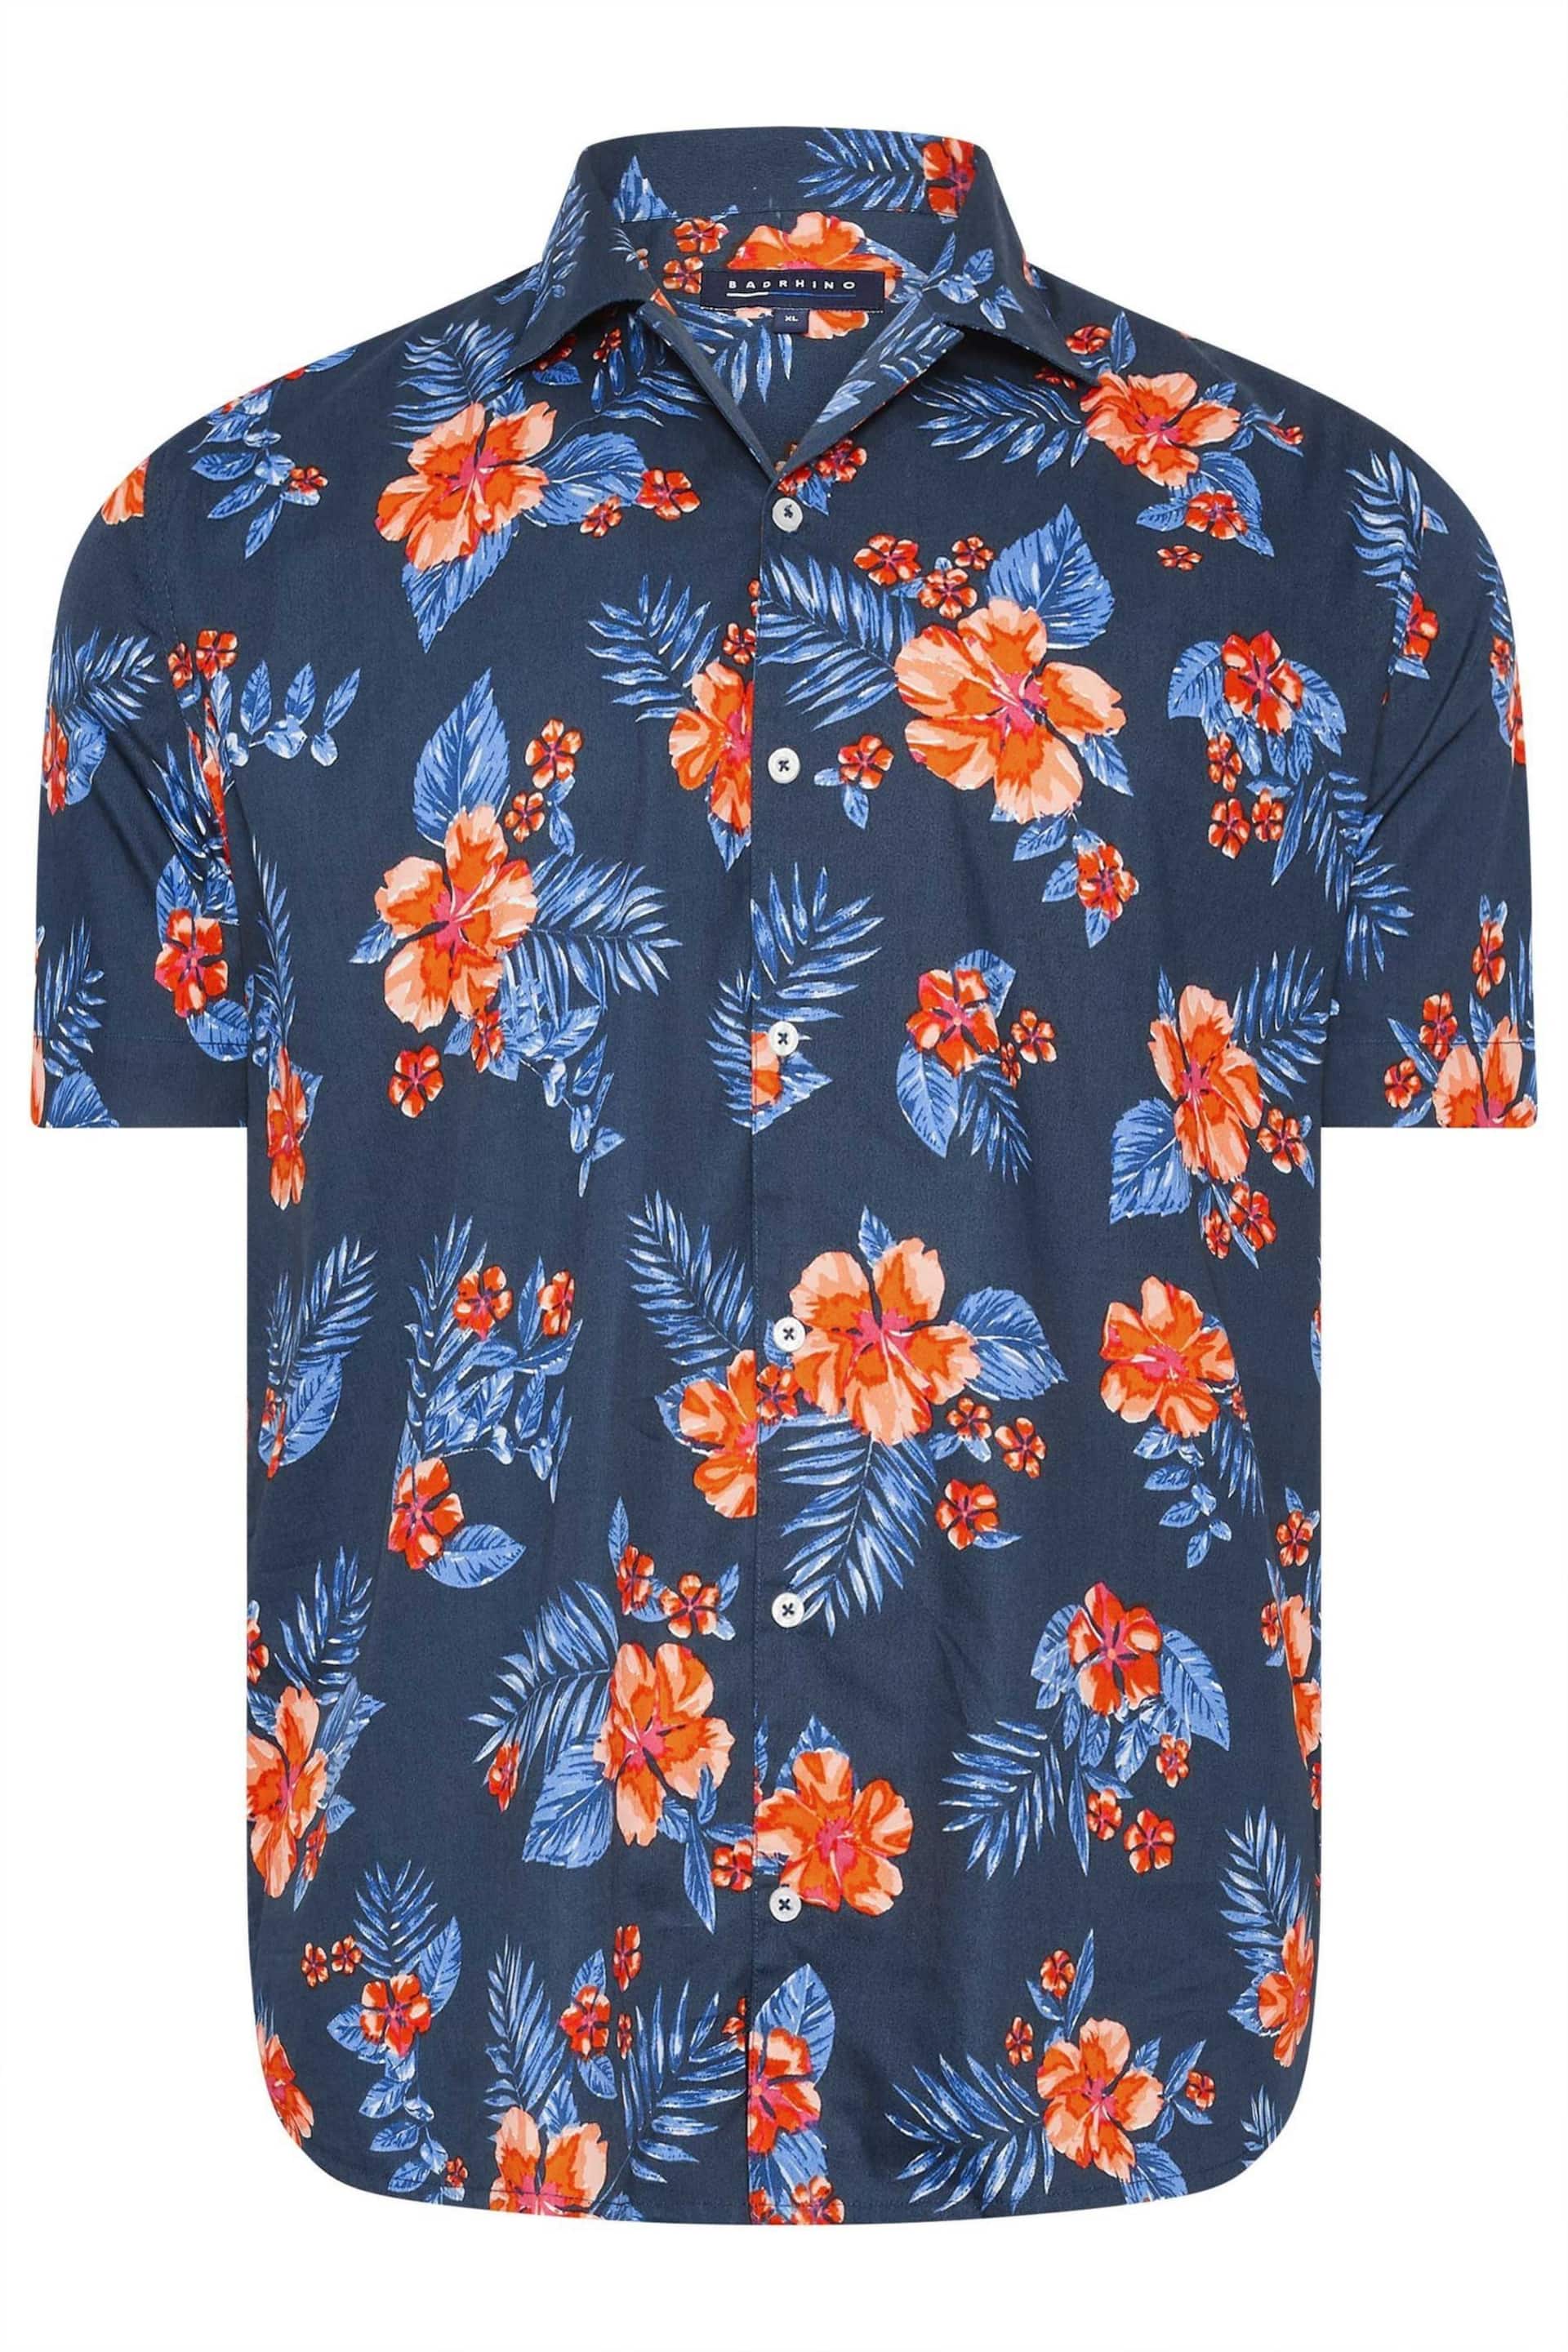 BadRhino Big & Tall Navy Blue & Orange Tropical Shirt - Image 2 of 3